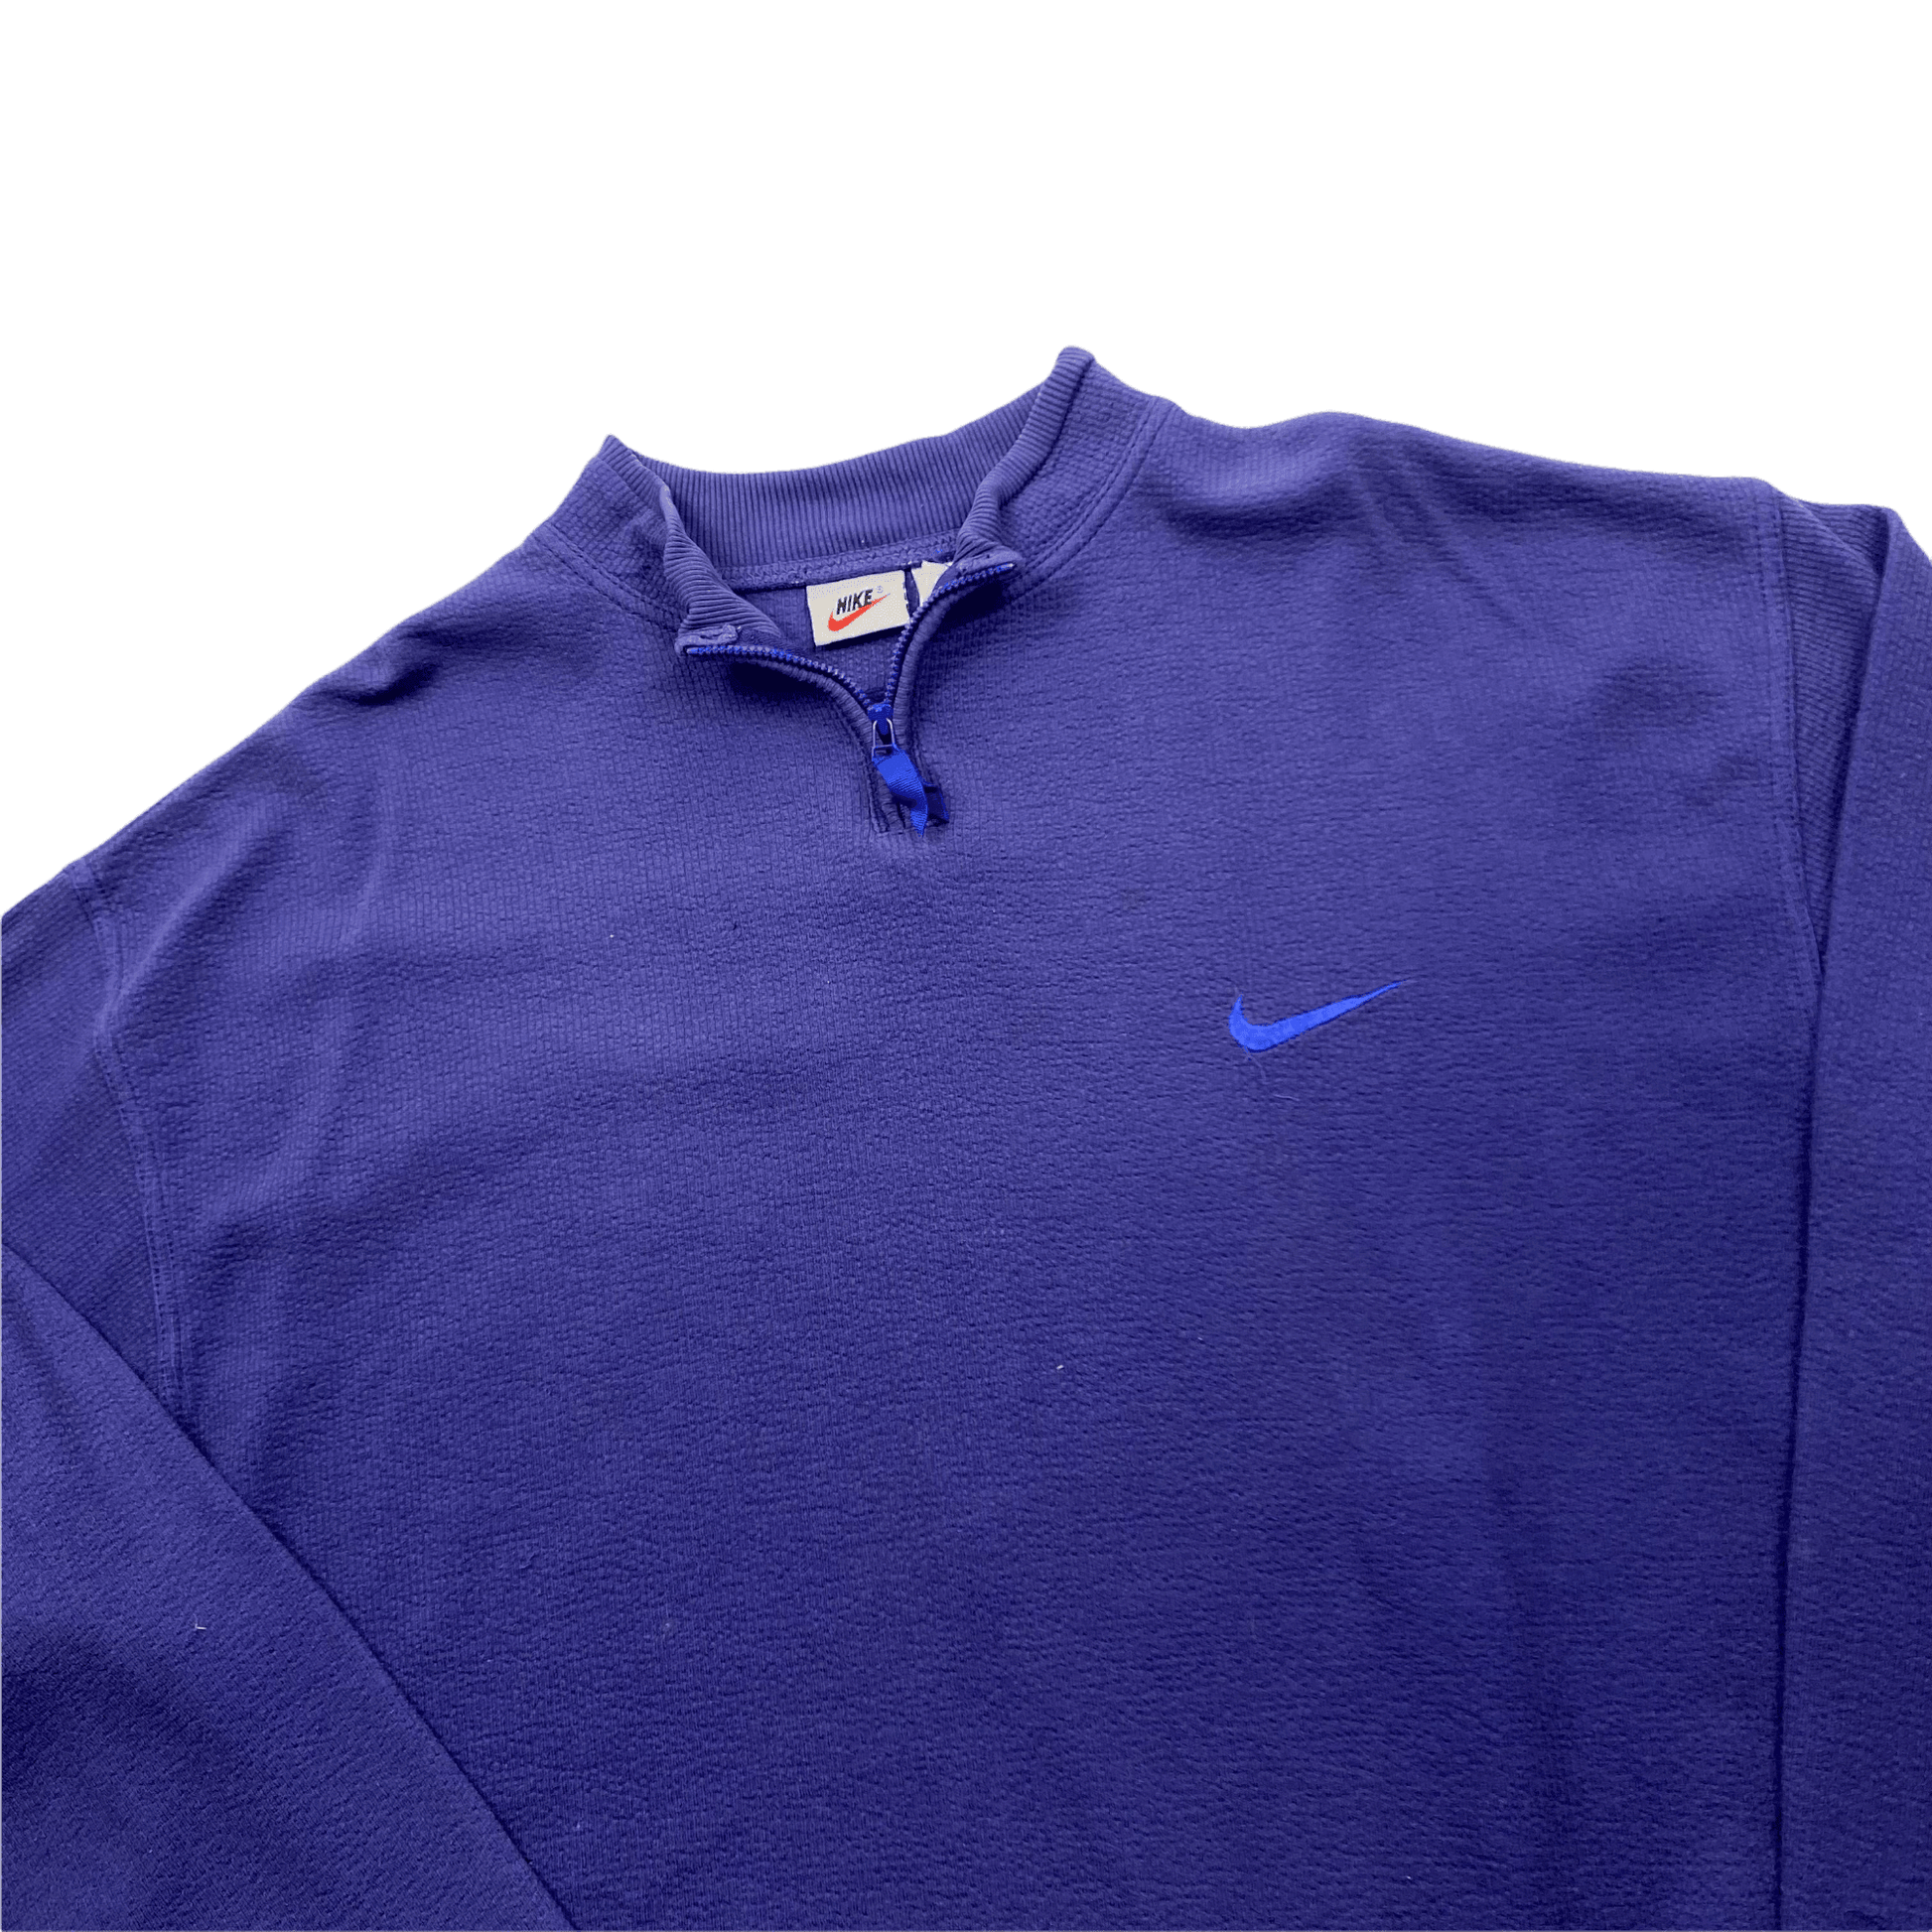 Vintage 90s Blue Nike Quarter Zip Sweatshirt - Large (Recommended Size - Medium) - The Streetwear Studio